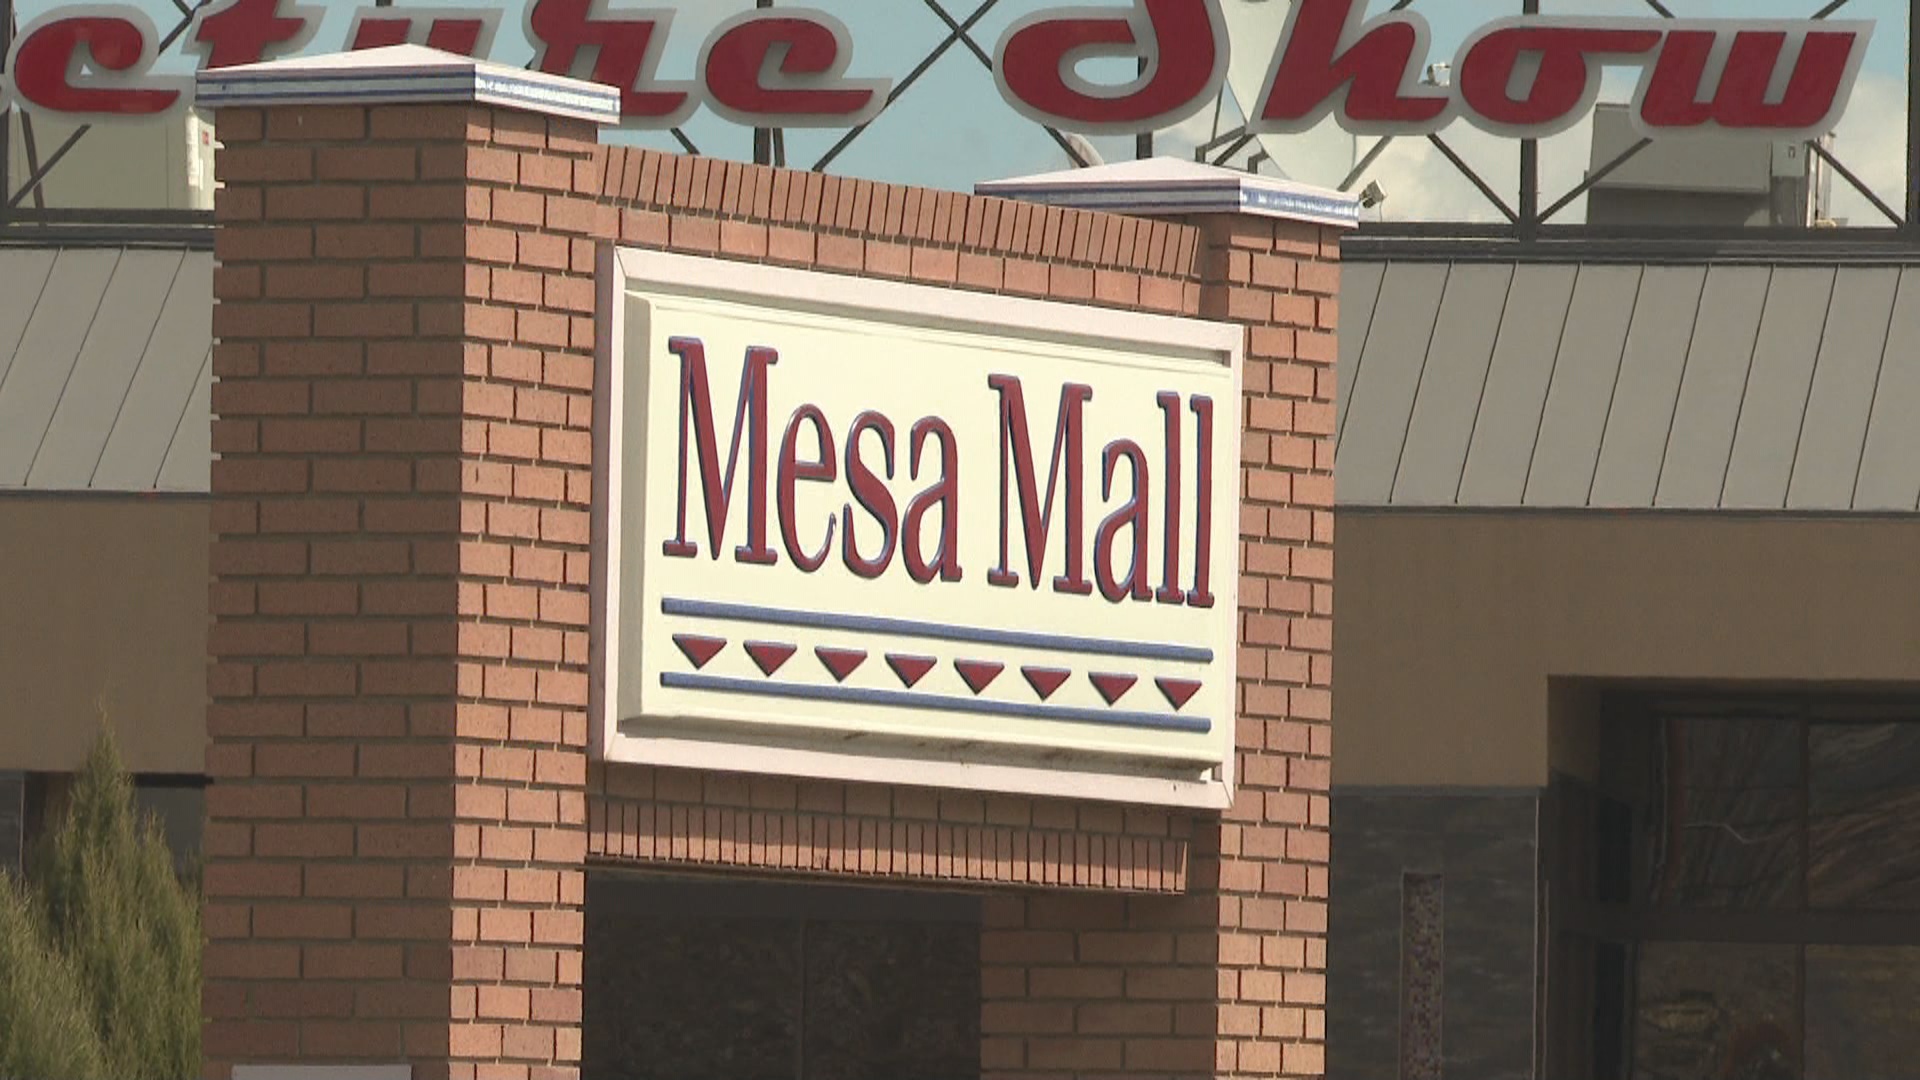 Mesa mall cinema ticket price